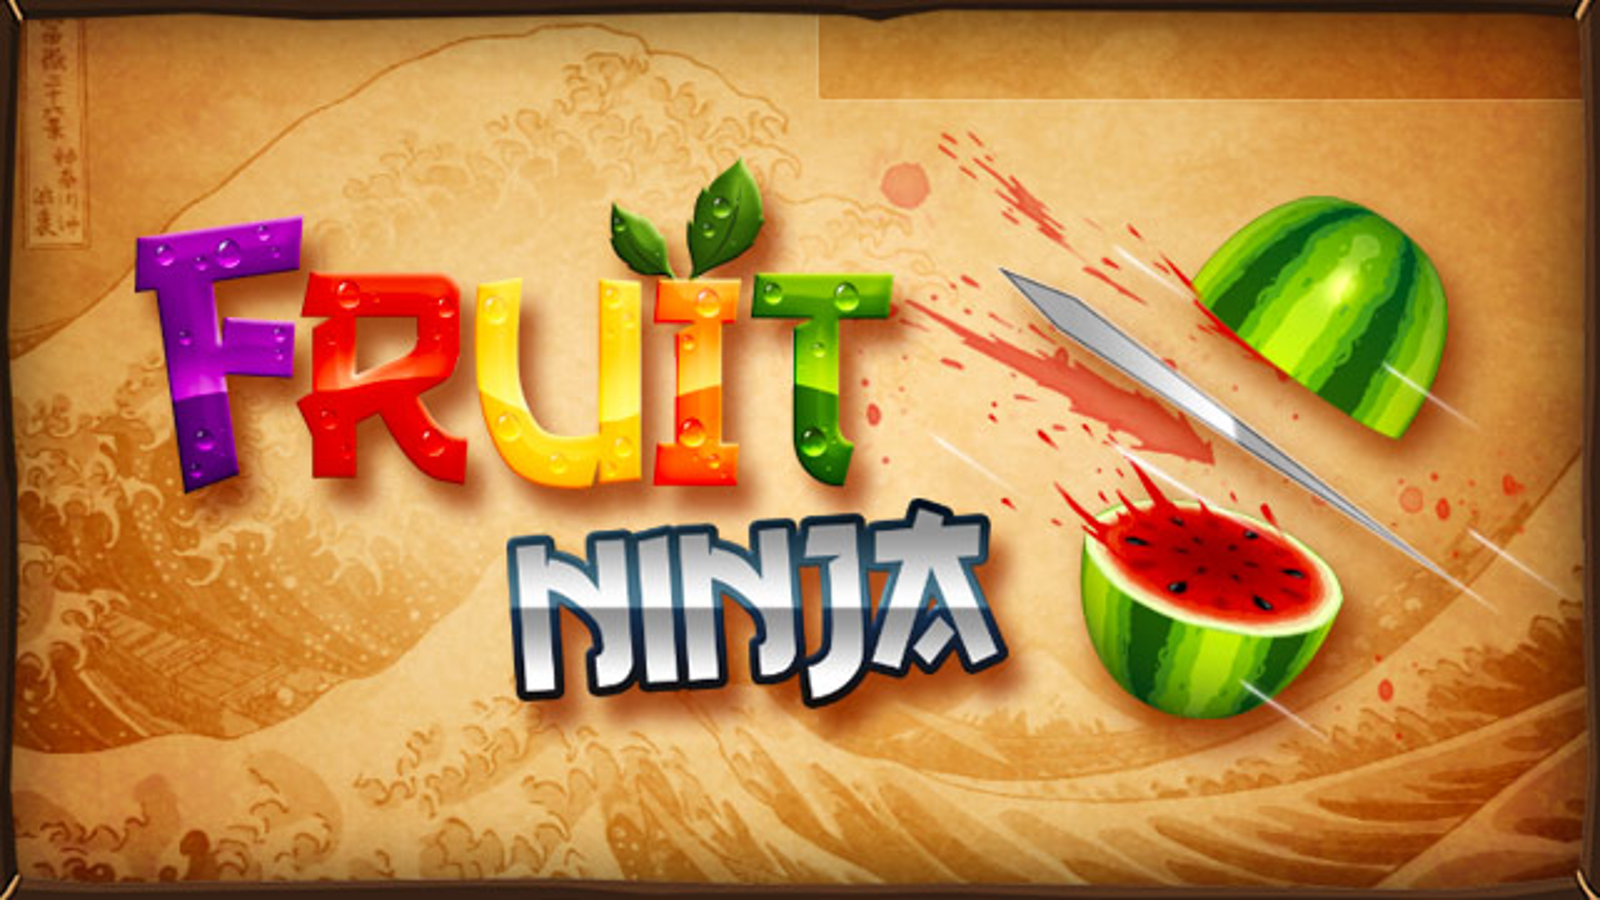 https://assetsio.reedpopcdn.com/fruit-ninja-main-title.jpg?width=1600&height=900&fit=crop&quality=100&format=png&enable=upscale&auto=webp